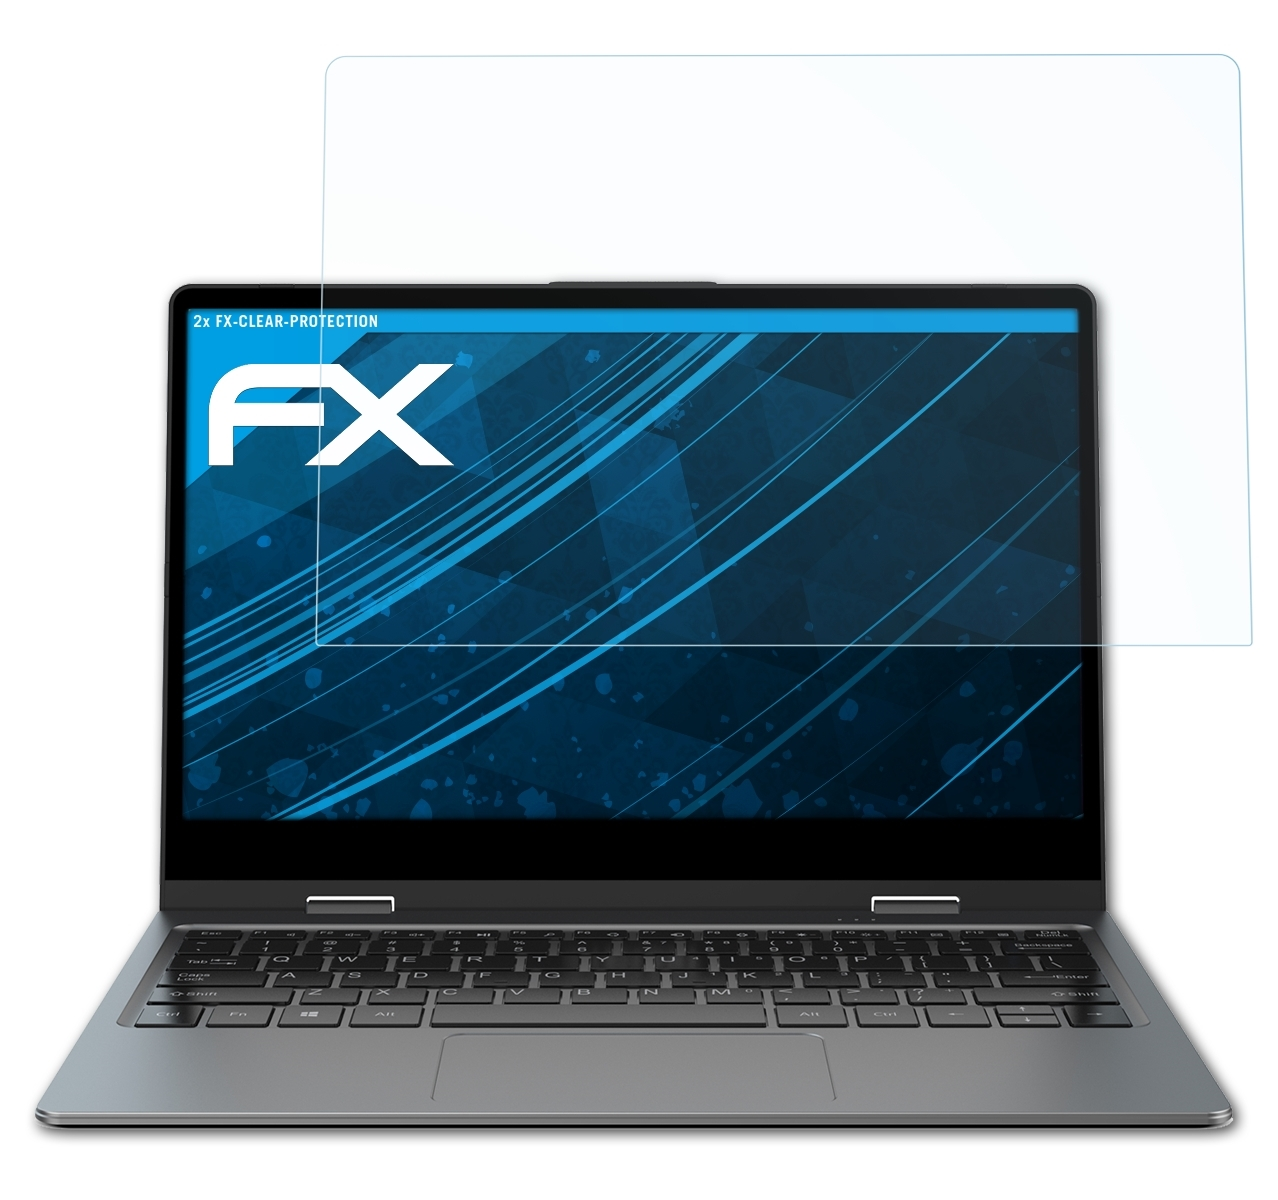 ATFOLIX 2x Teclast FX-Clear Displayschutz(für F5)